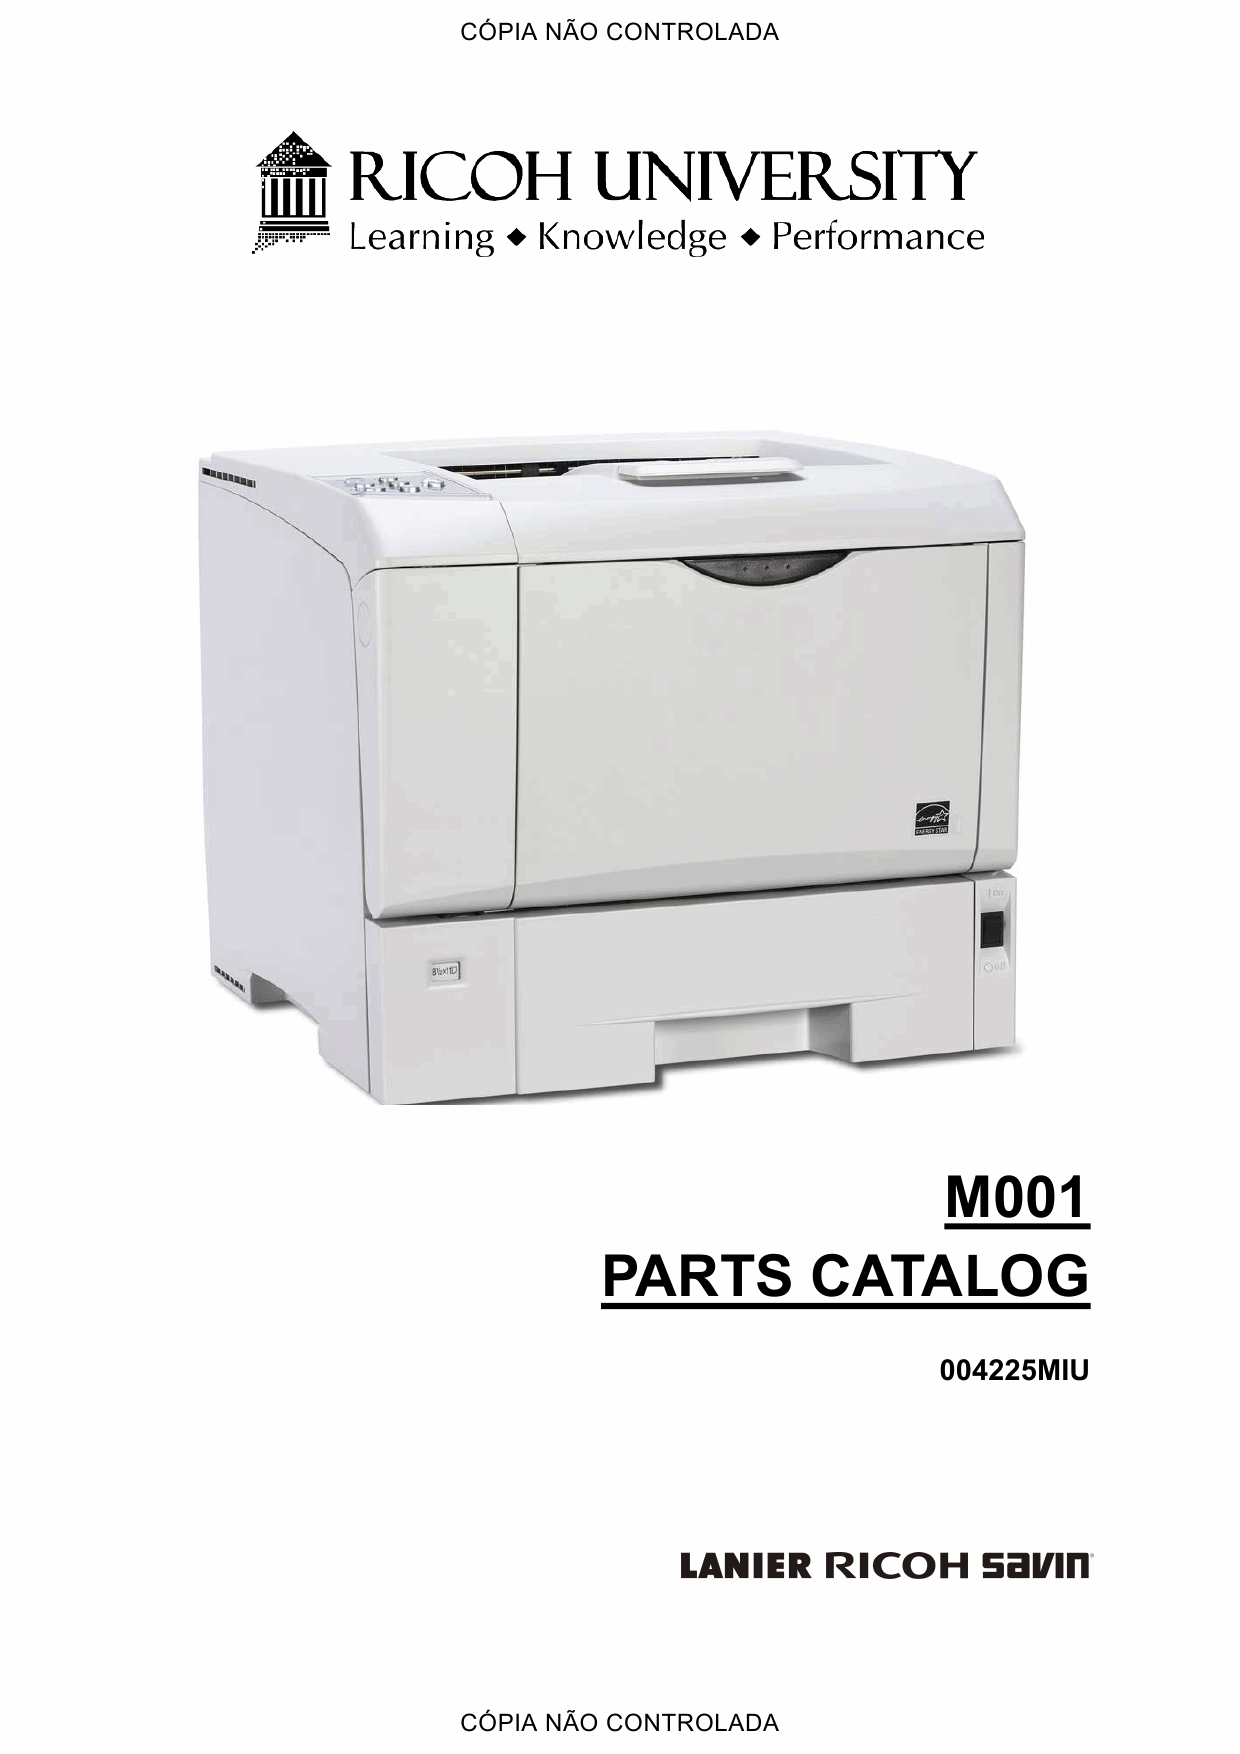 RICOH Aficio SP-4200N M001 Parts Catalog-1